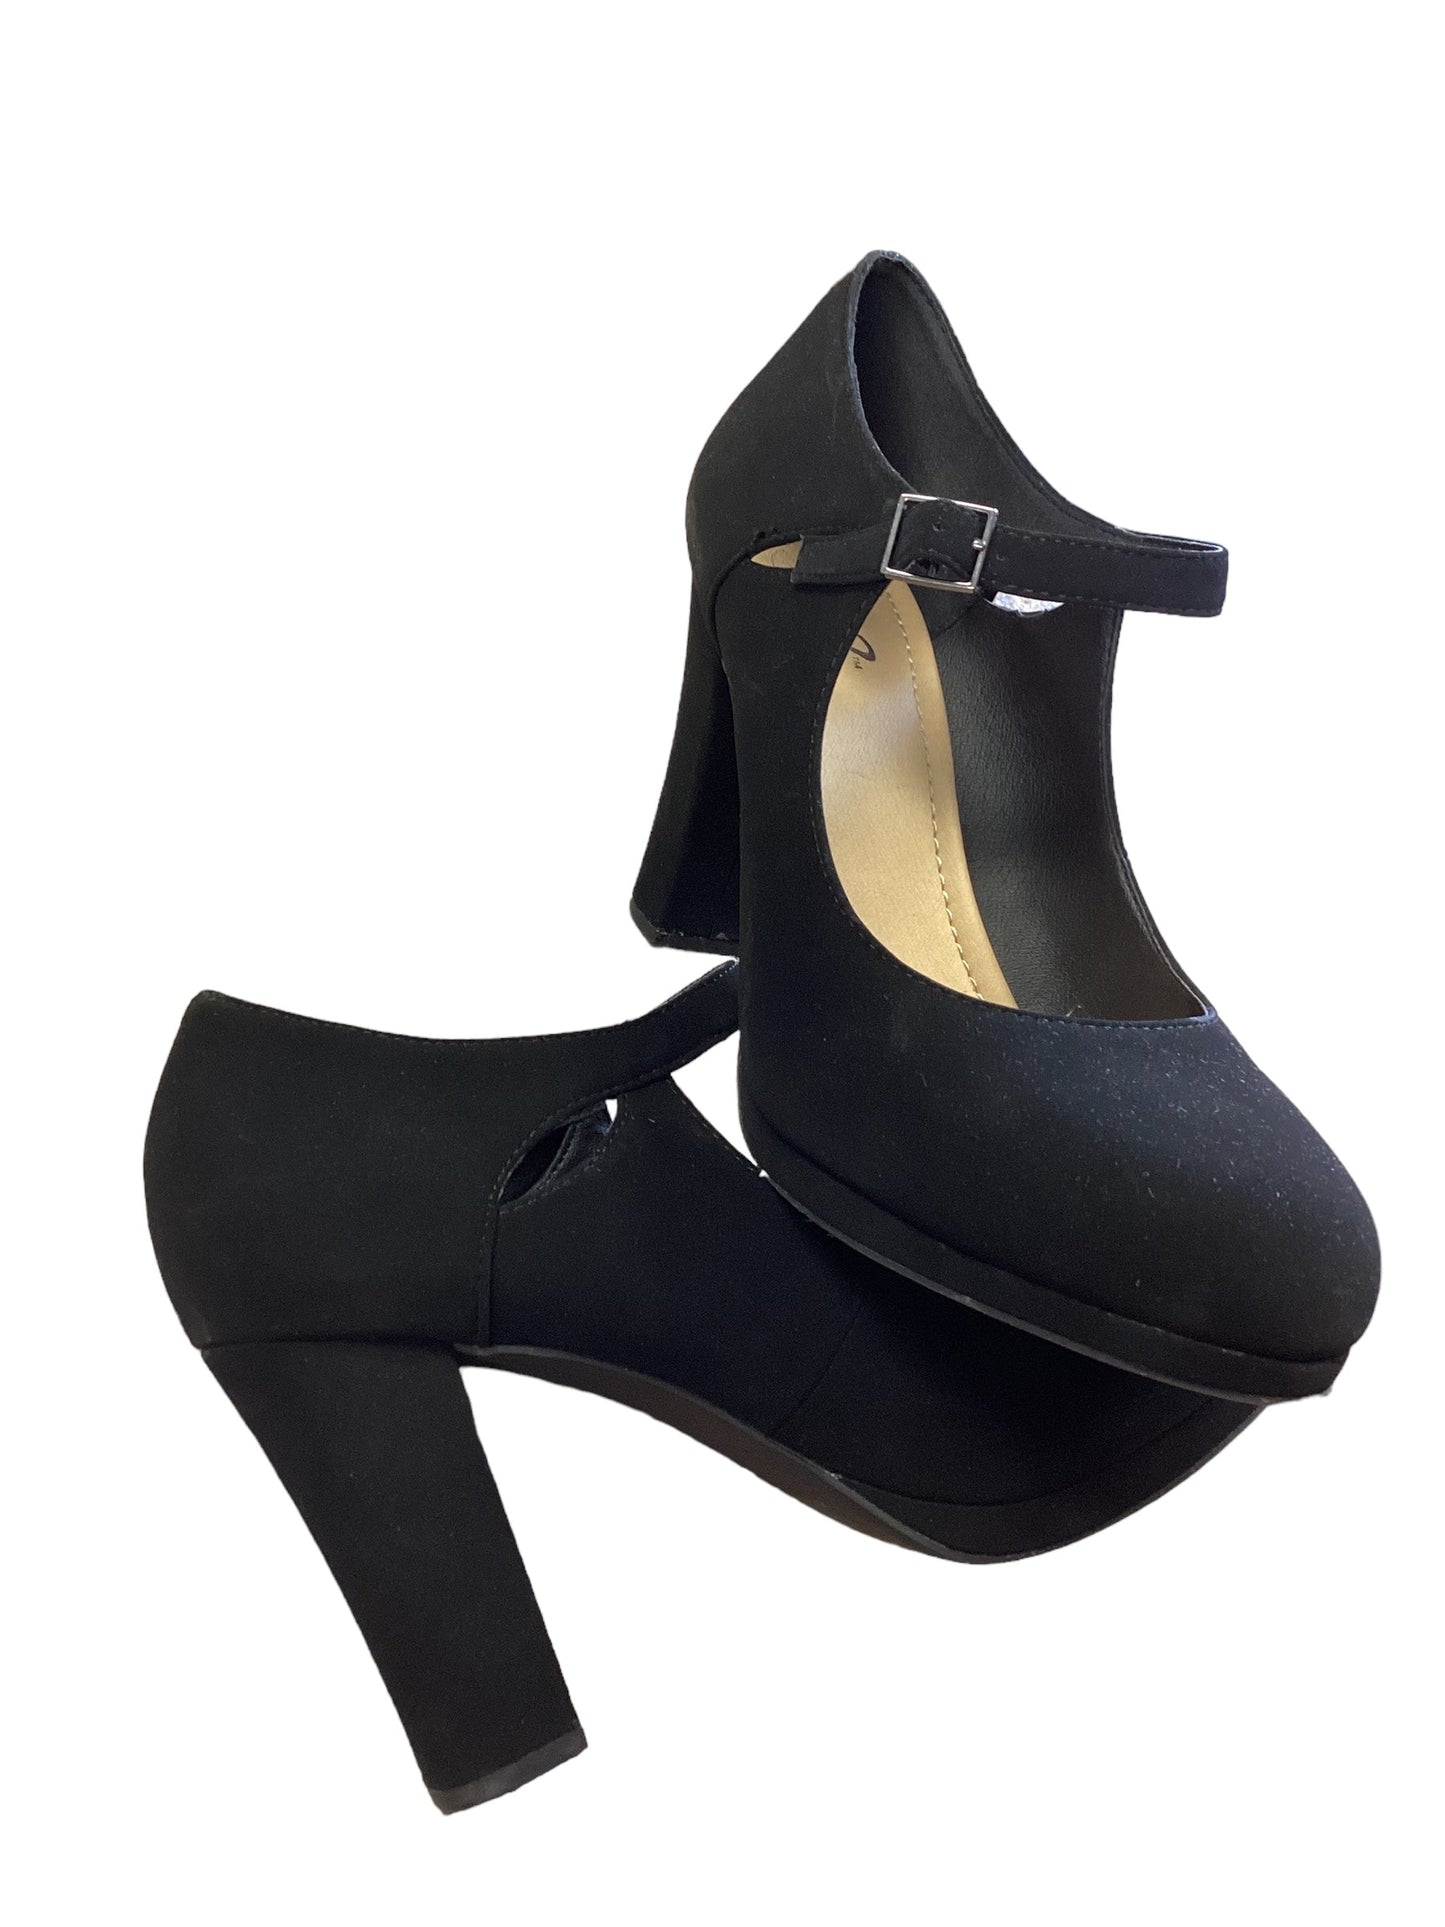 Black Shoes Heels Block Clothes Mentor, Size 11